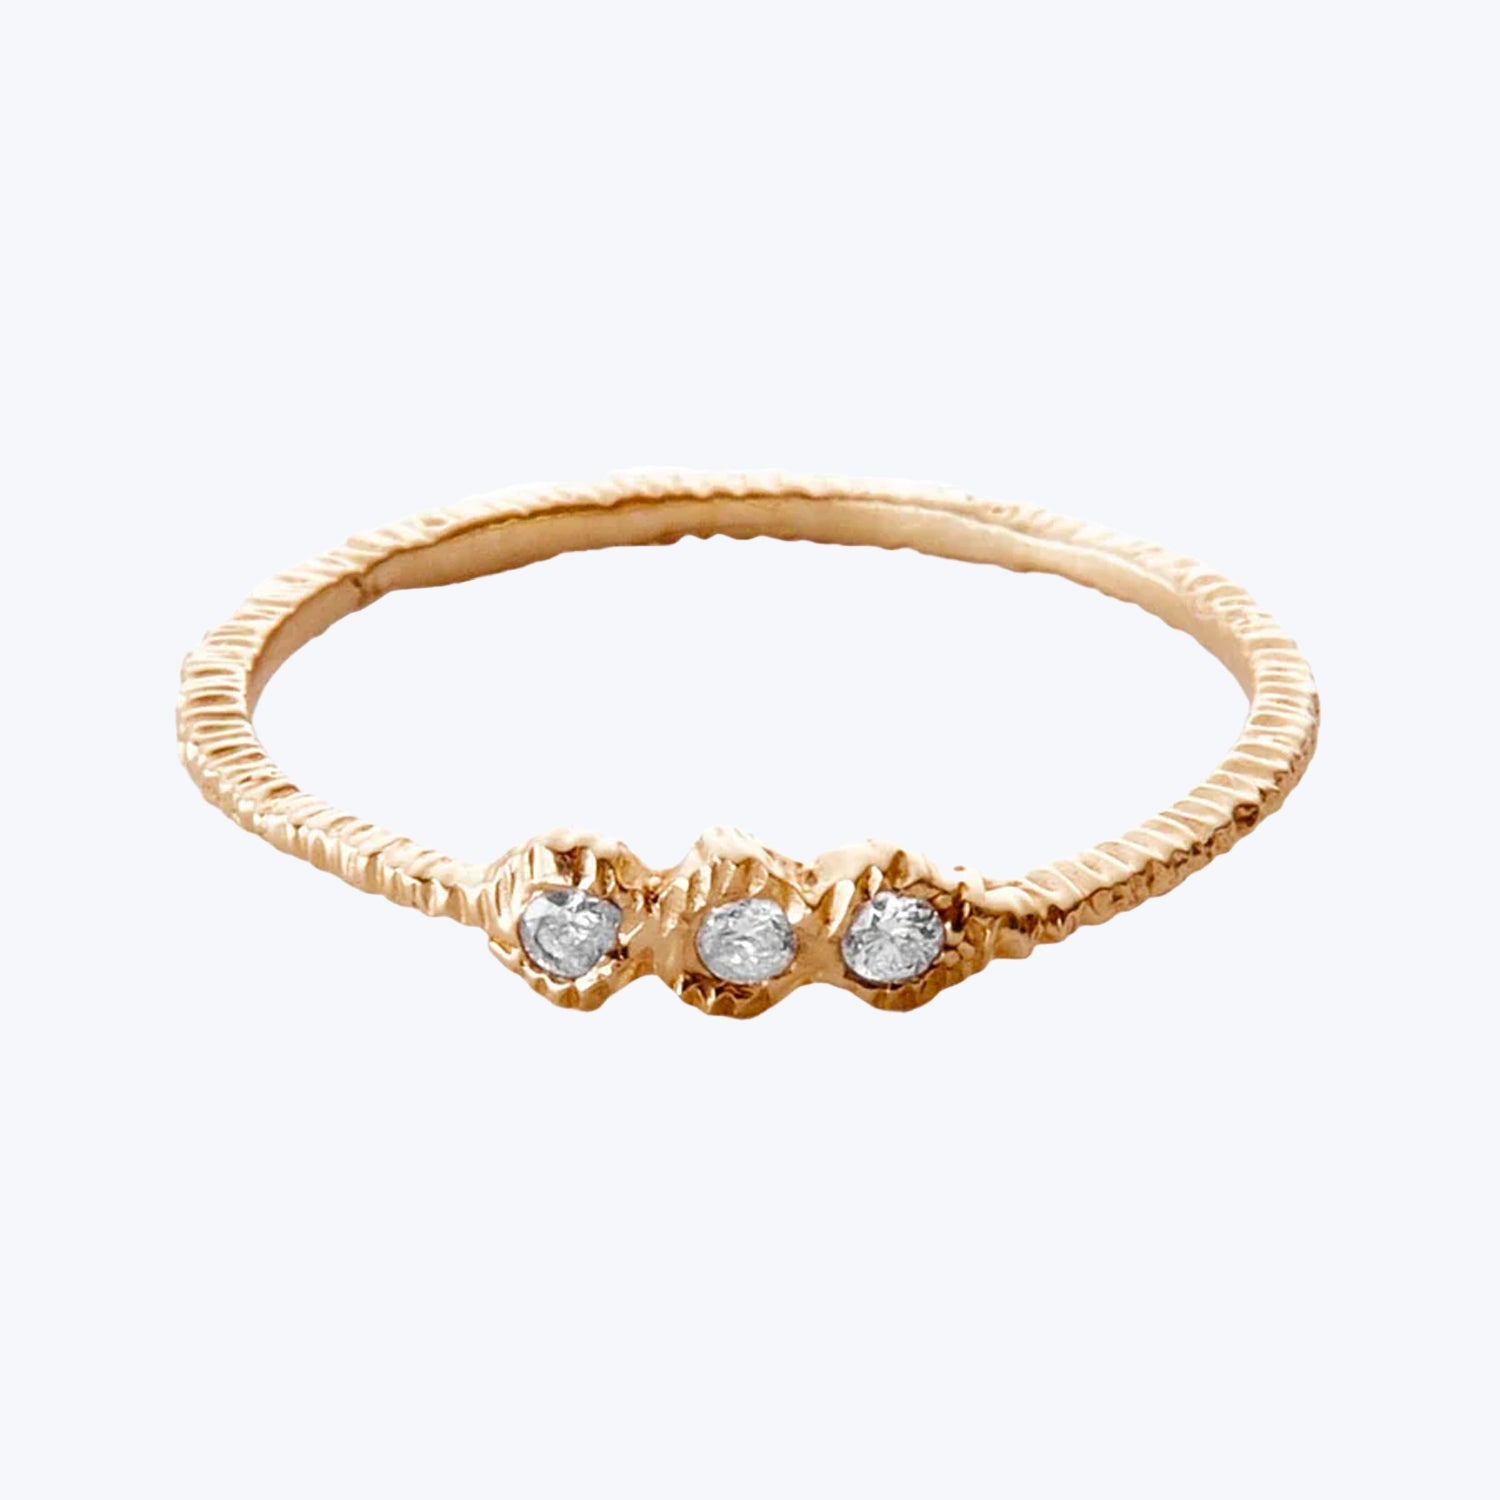 Elegant gold ring with three sparkling round gemstone settings.